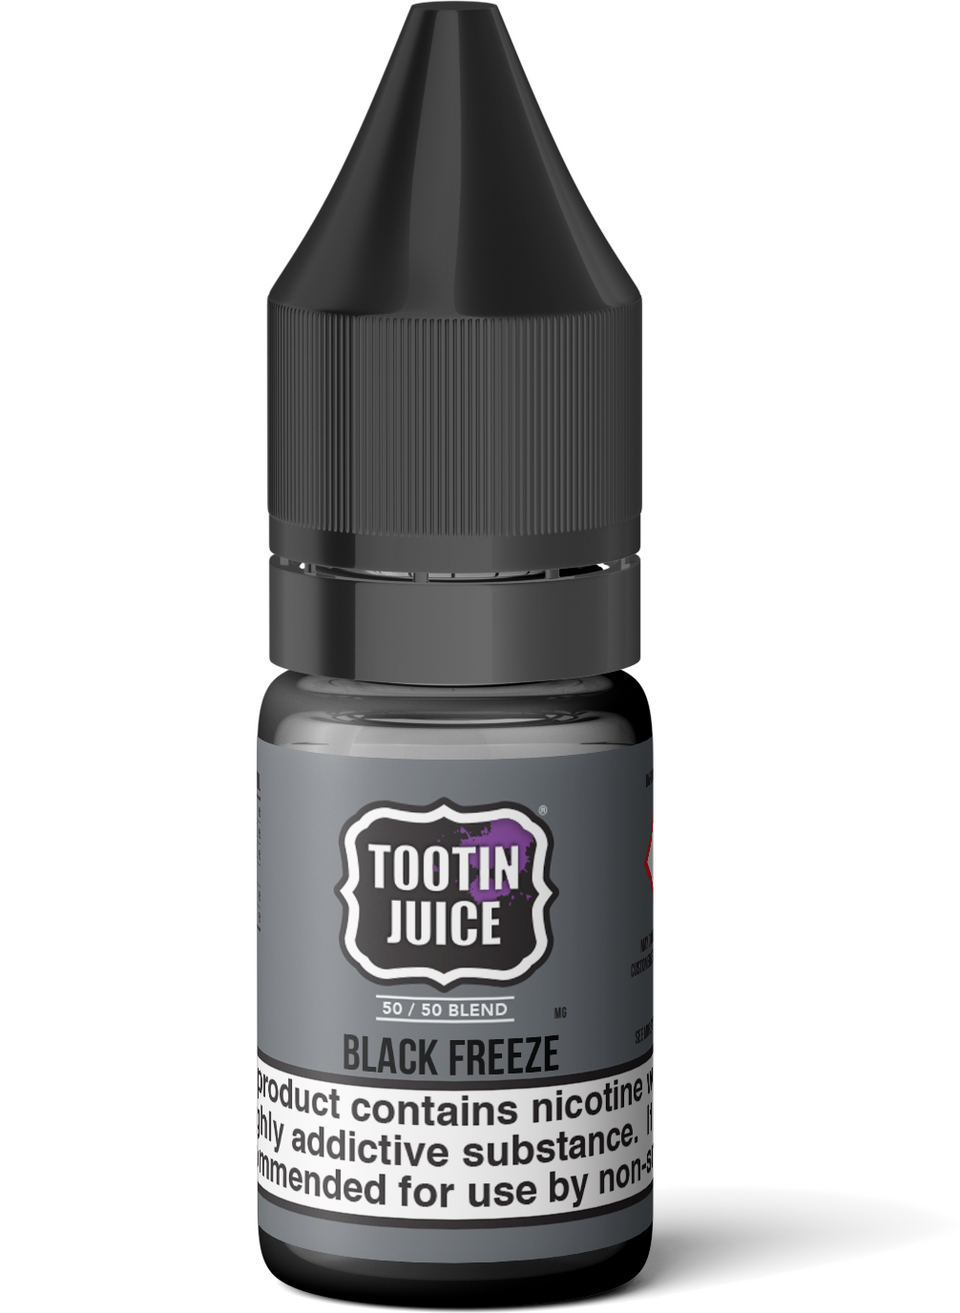 Black Freeze Tootin Juice - ASPIRE UK